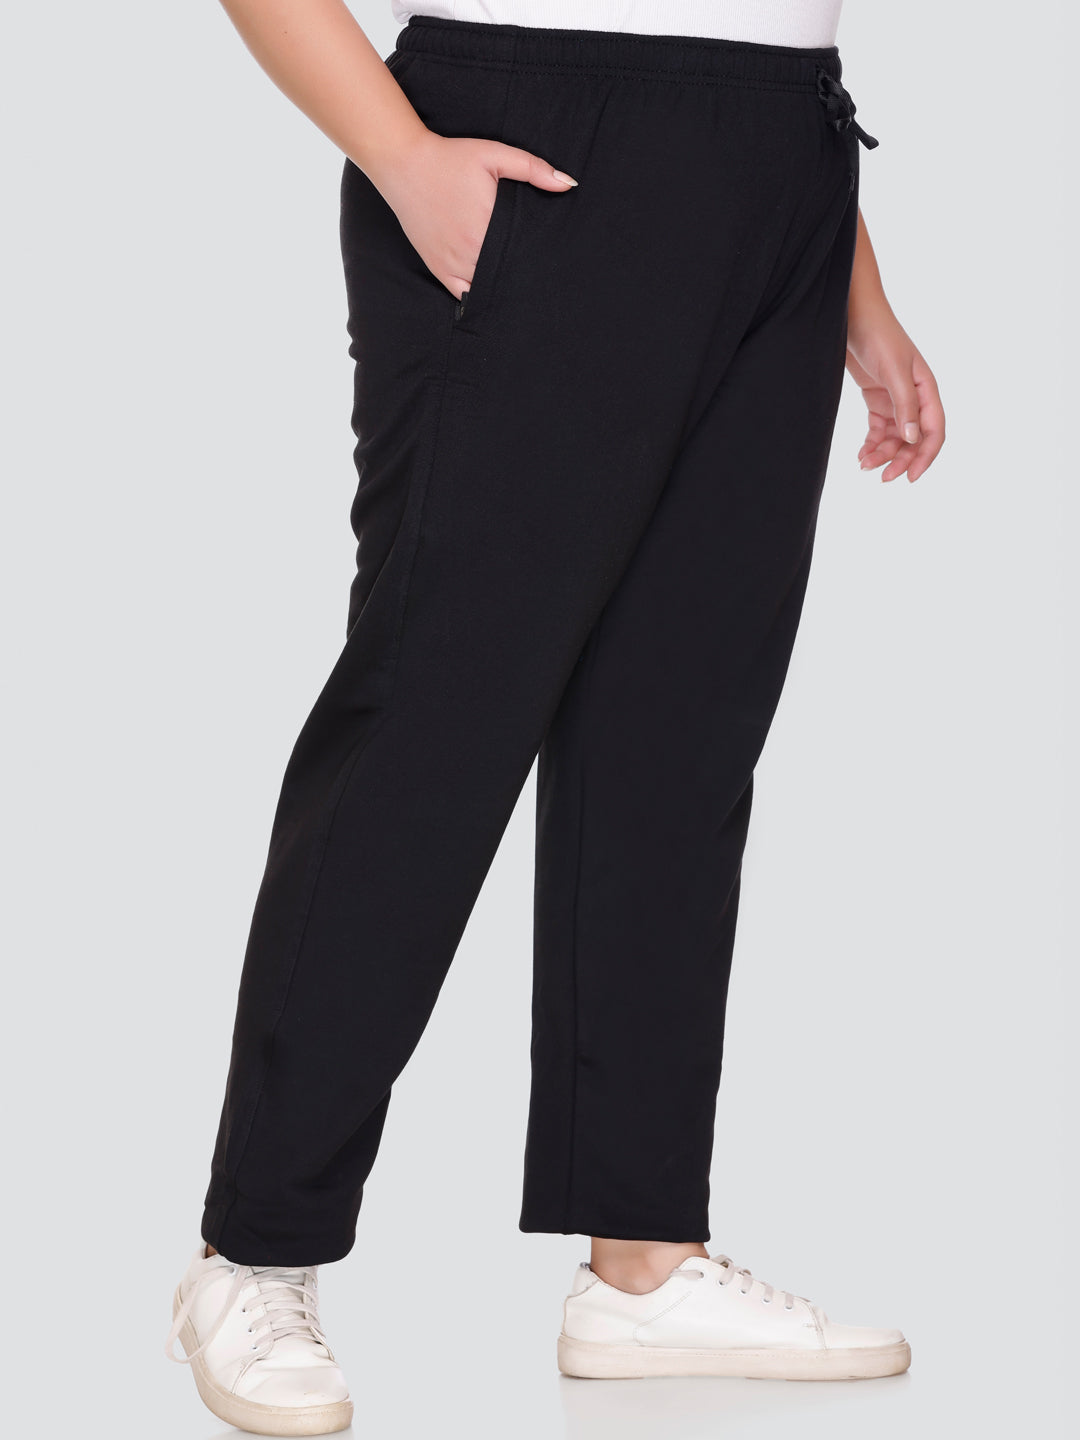 Yufta women maroon pure cotton plus size slim fit trousers - YUFTA - 4225085